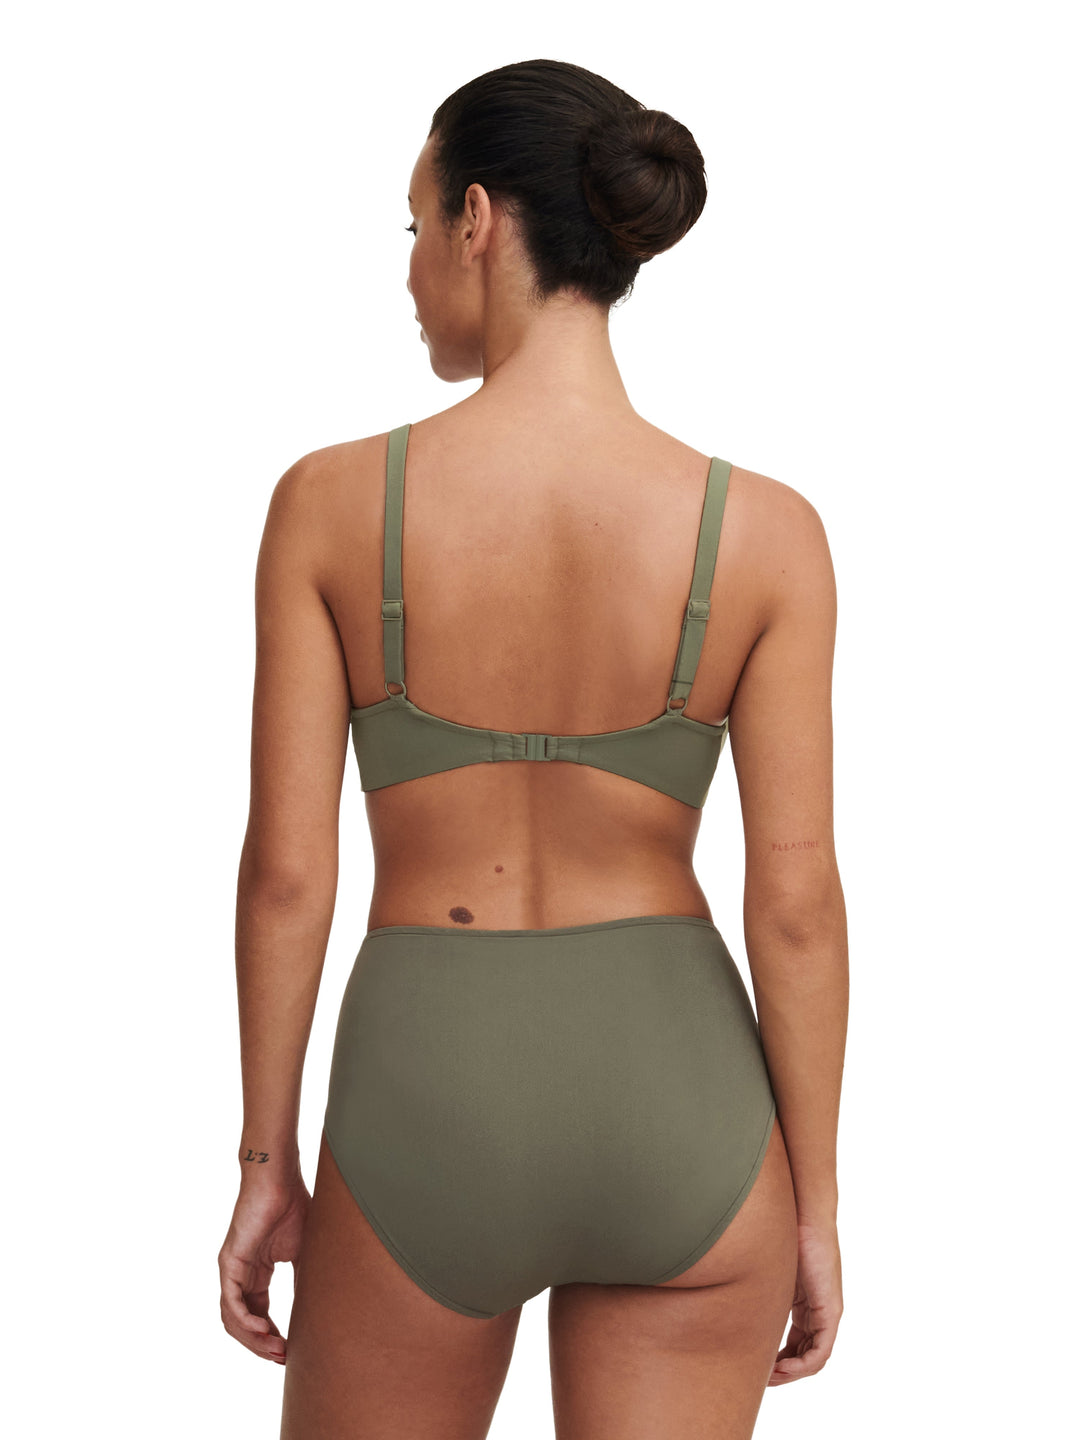 Chantelle Swimwear Emblem Full Bikini Brief - Khaki Green Full Bikini Brief Chantelle 